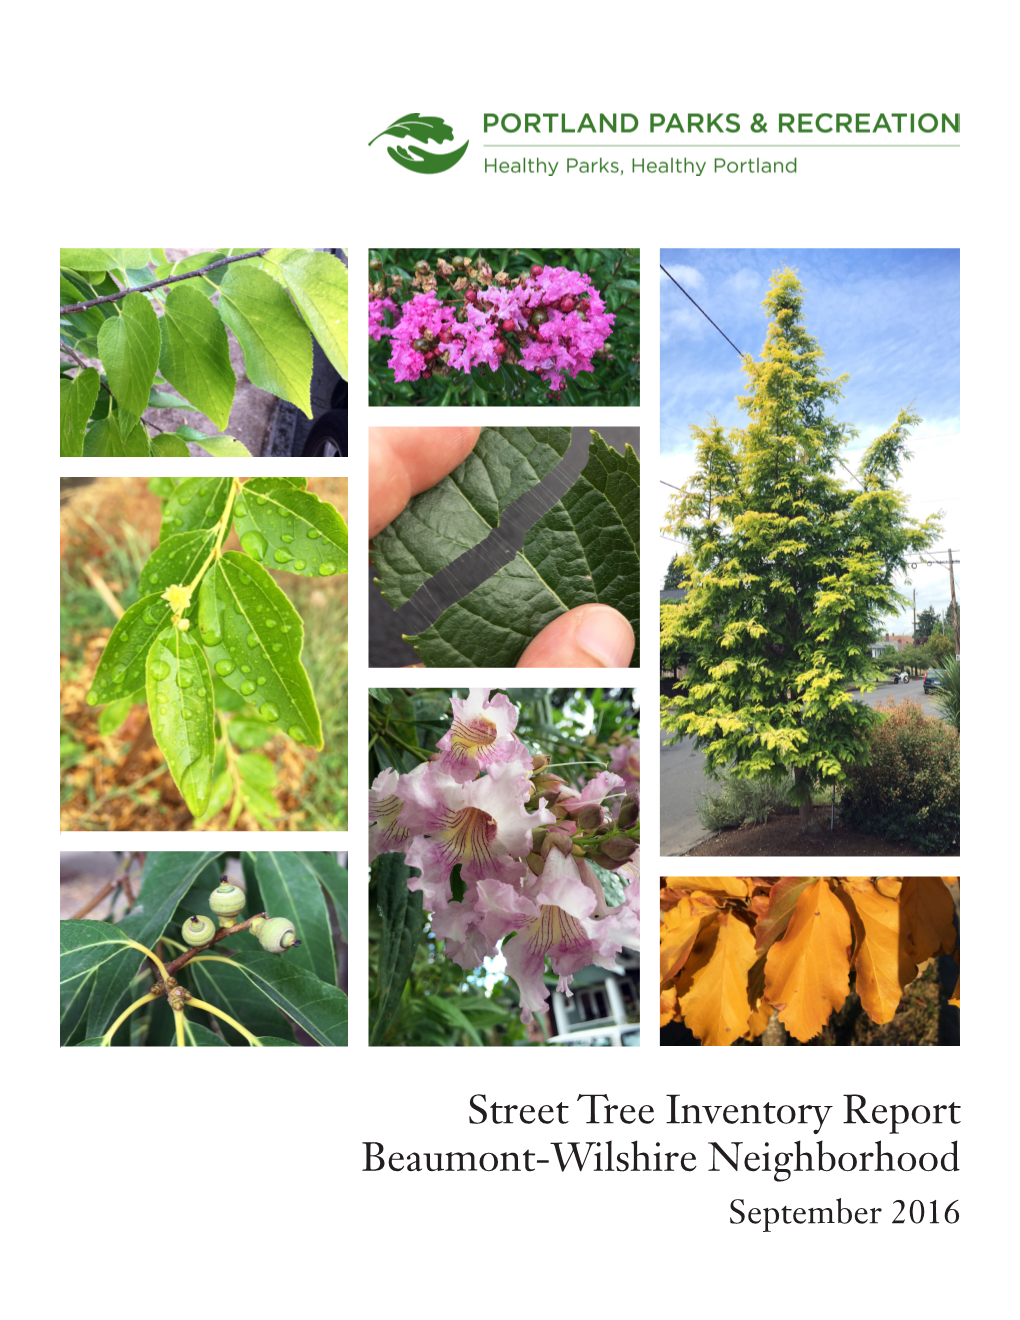 Street Tree Inventory Report Beaumont-Wilshire Neighborhood September 2016 Street Tree Inventory Report: Beaumont-Wilshire Neighborhood September 2016